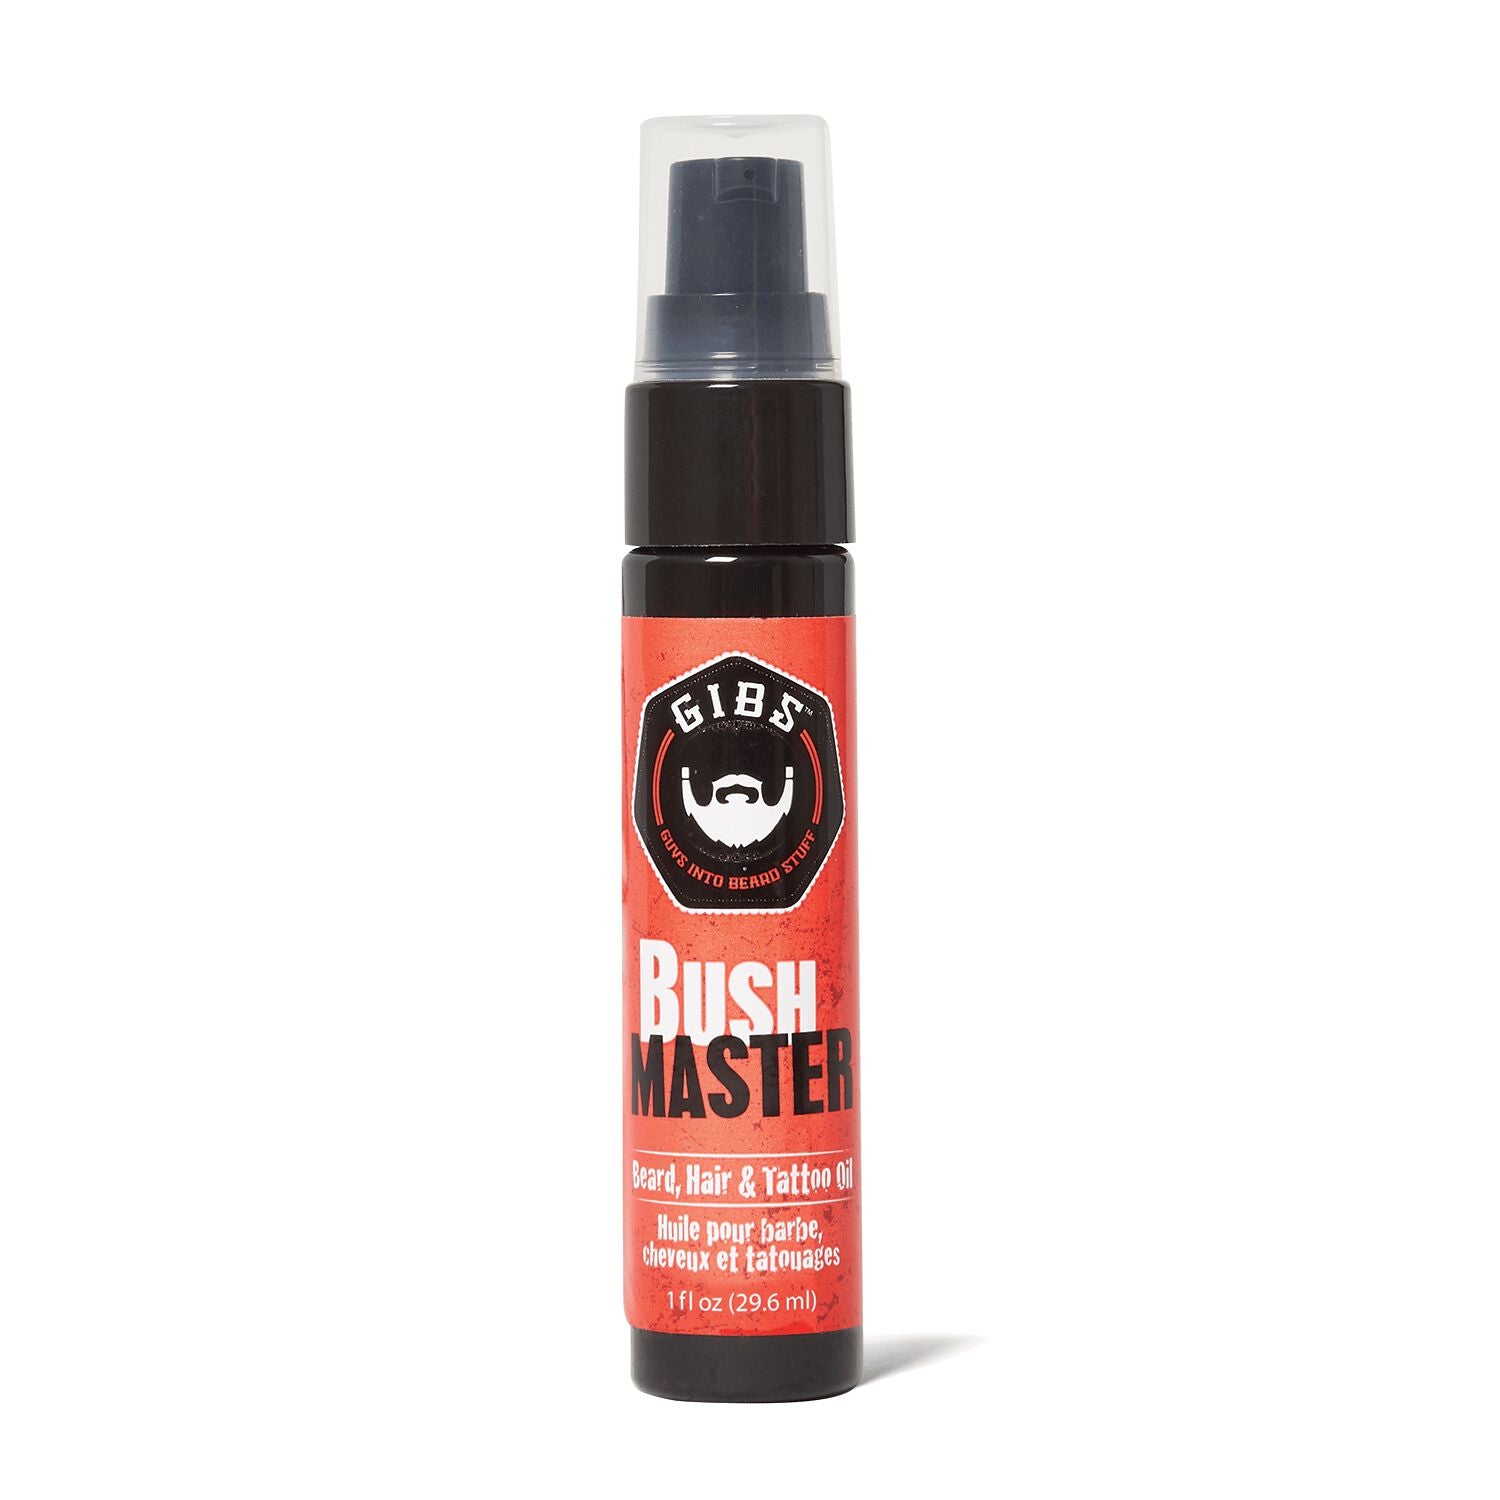 Beard, Hair & Tattoo Oil: Bush Master